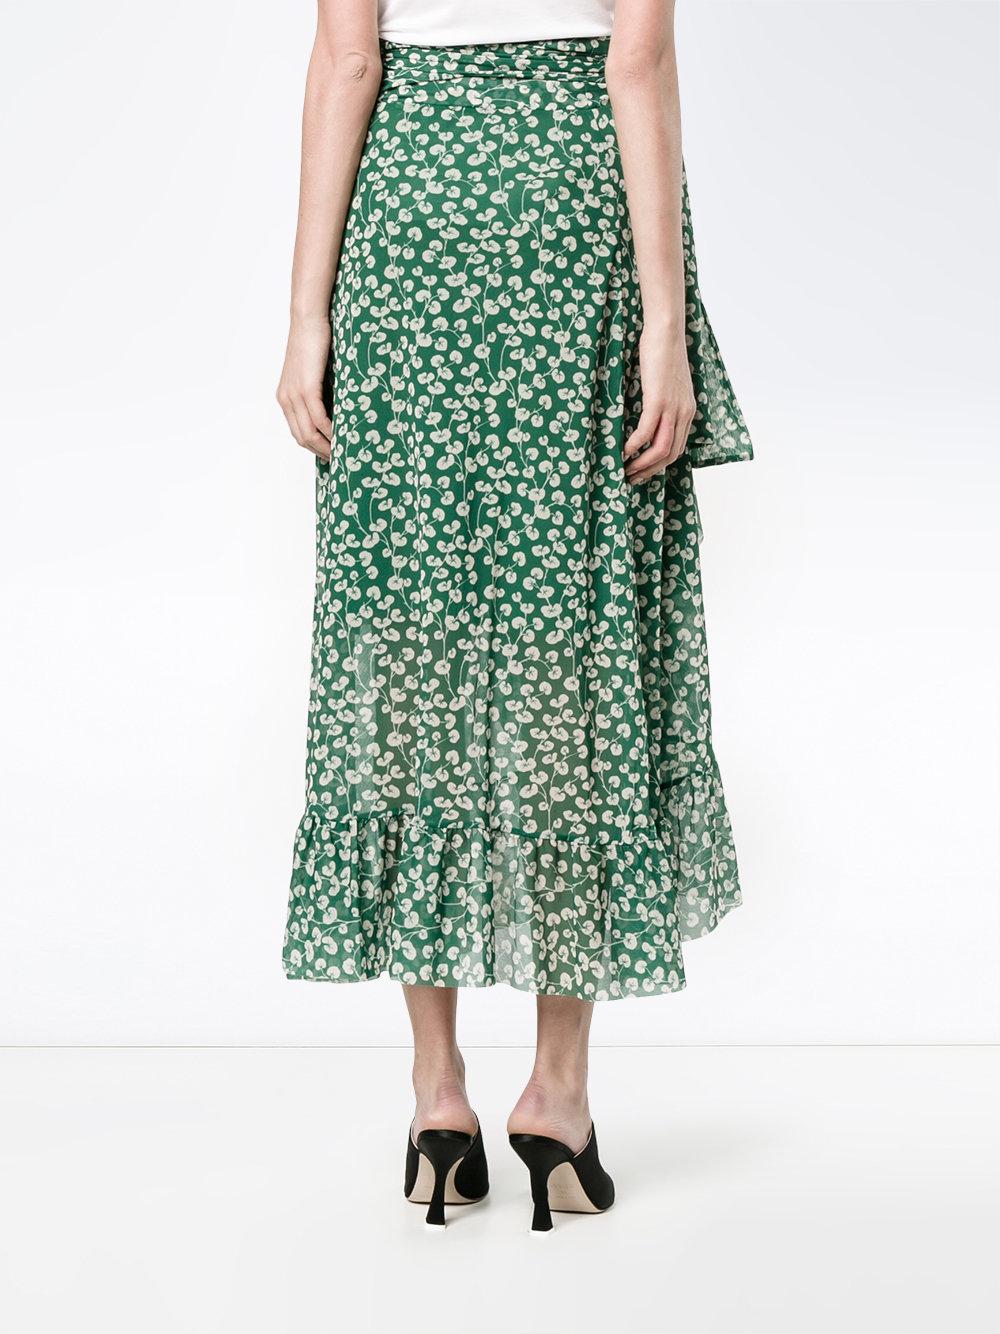 Ganni Capella Mesh Floral Print Skirt in Green | Lyst